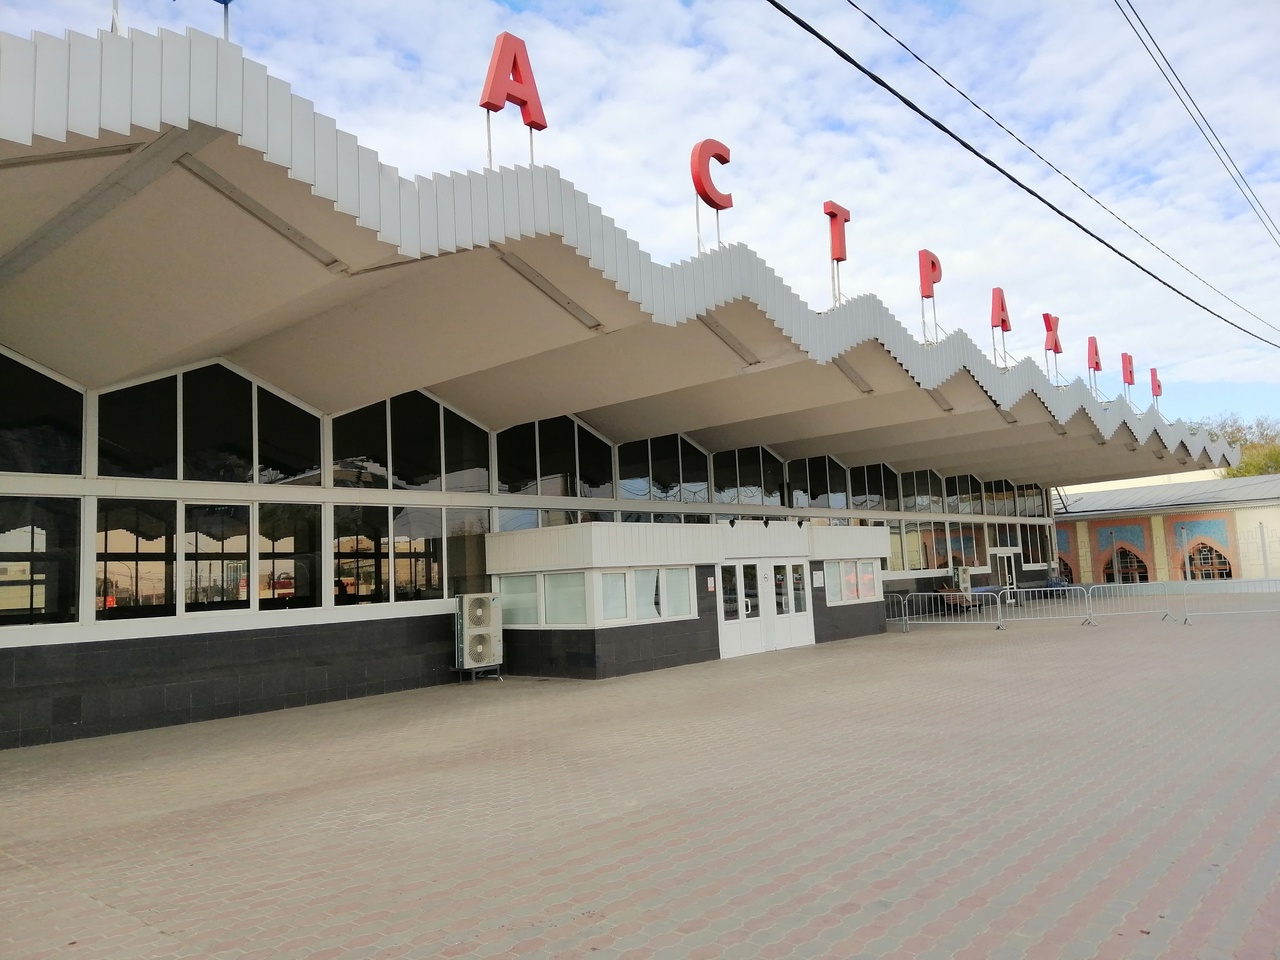 Жд астрахань телефон. Вокзал Астрахань 1. Астрахань 1 ЖД вокзал. Астраханский вокзал поезд. Железнодорожная станция Астрахань.